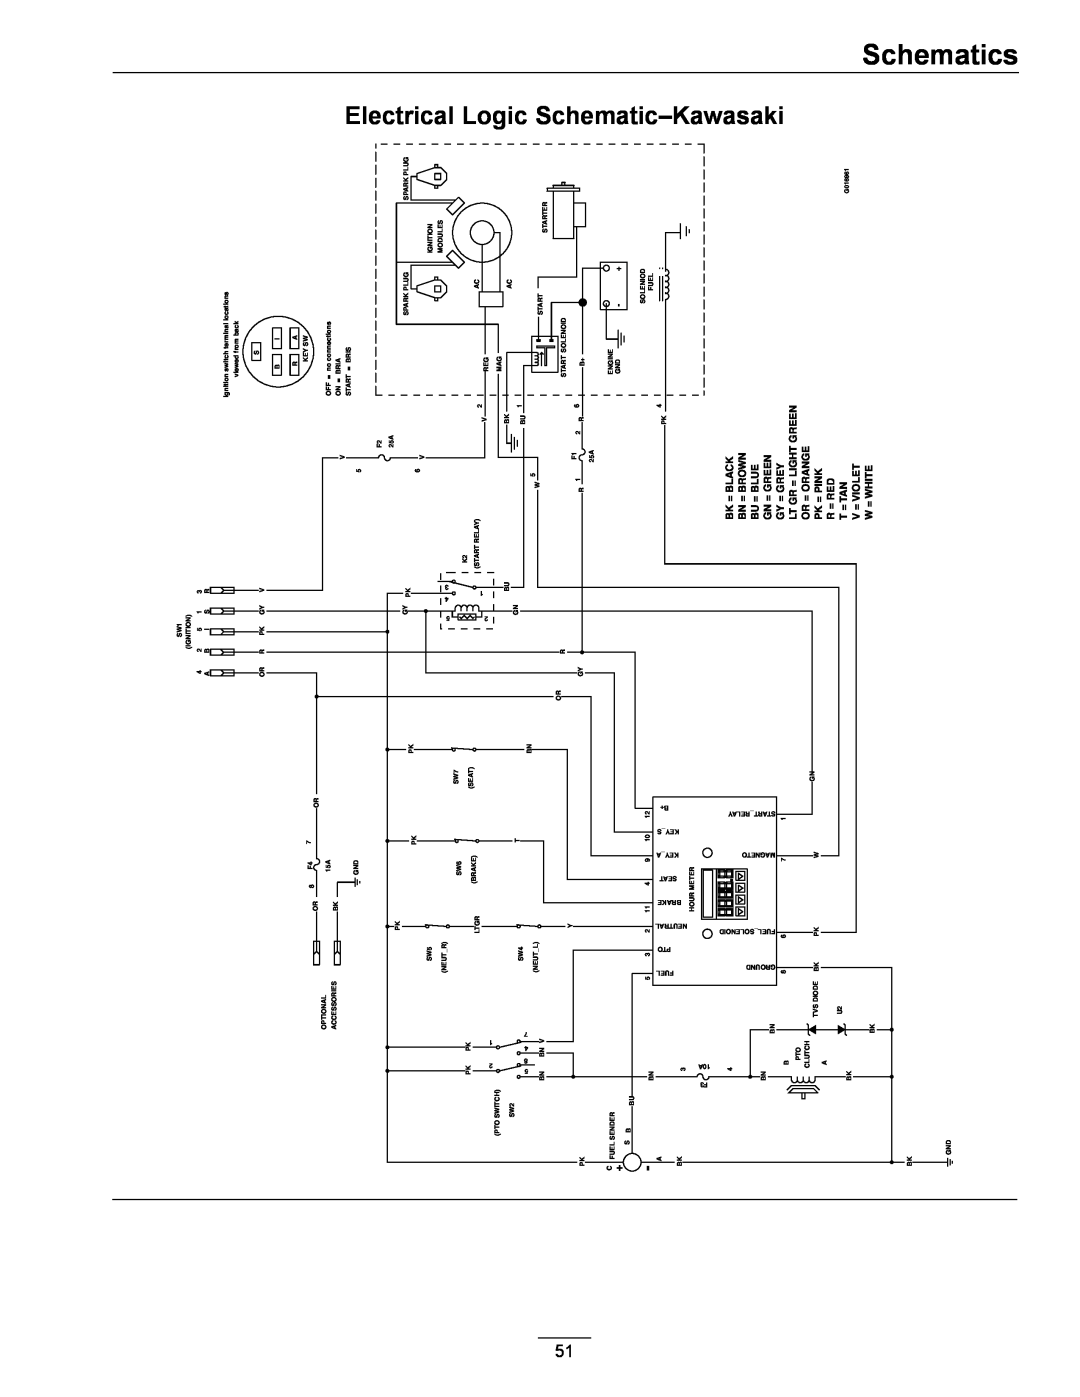 Exmark 000 & higher, 312 manual Electrical Logic Schematic-Kawasaki, Schematics 